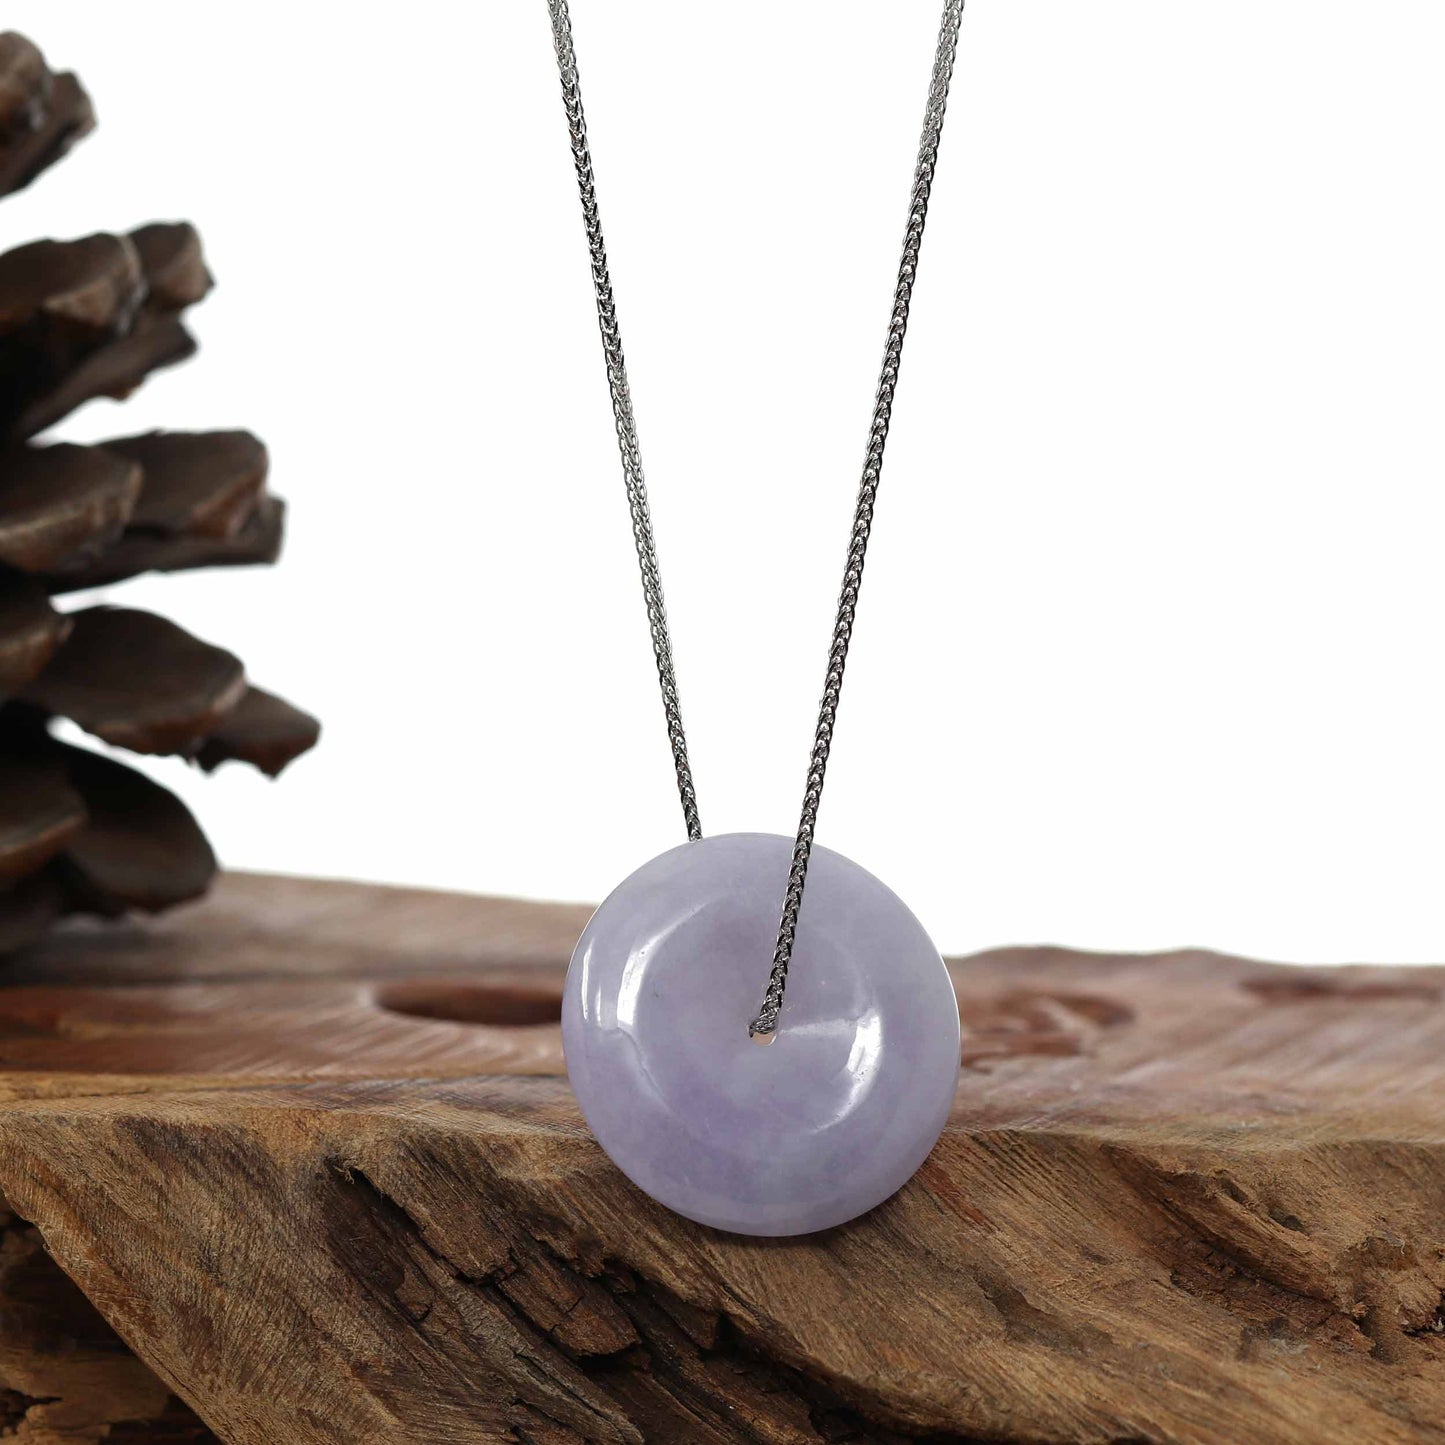 RealJade® Co. Jade Pendant Necklace "Good Luck Button" Necklace Lavender Jadeite Jade Lucky Ping An Kou Necklace